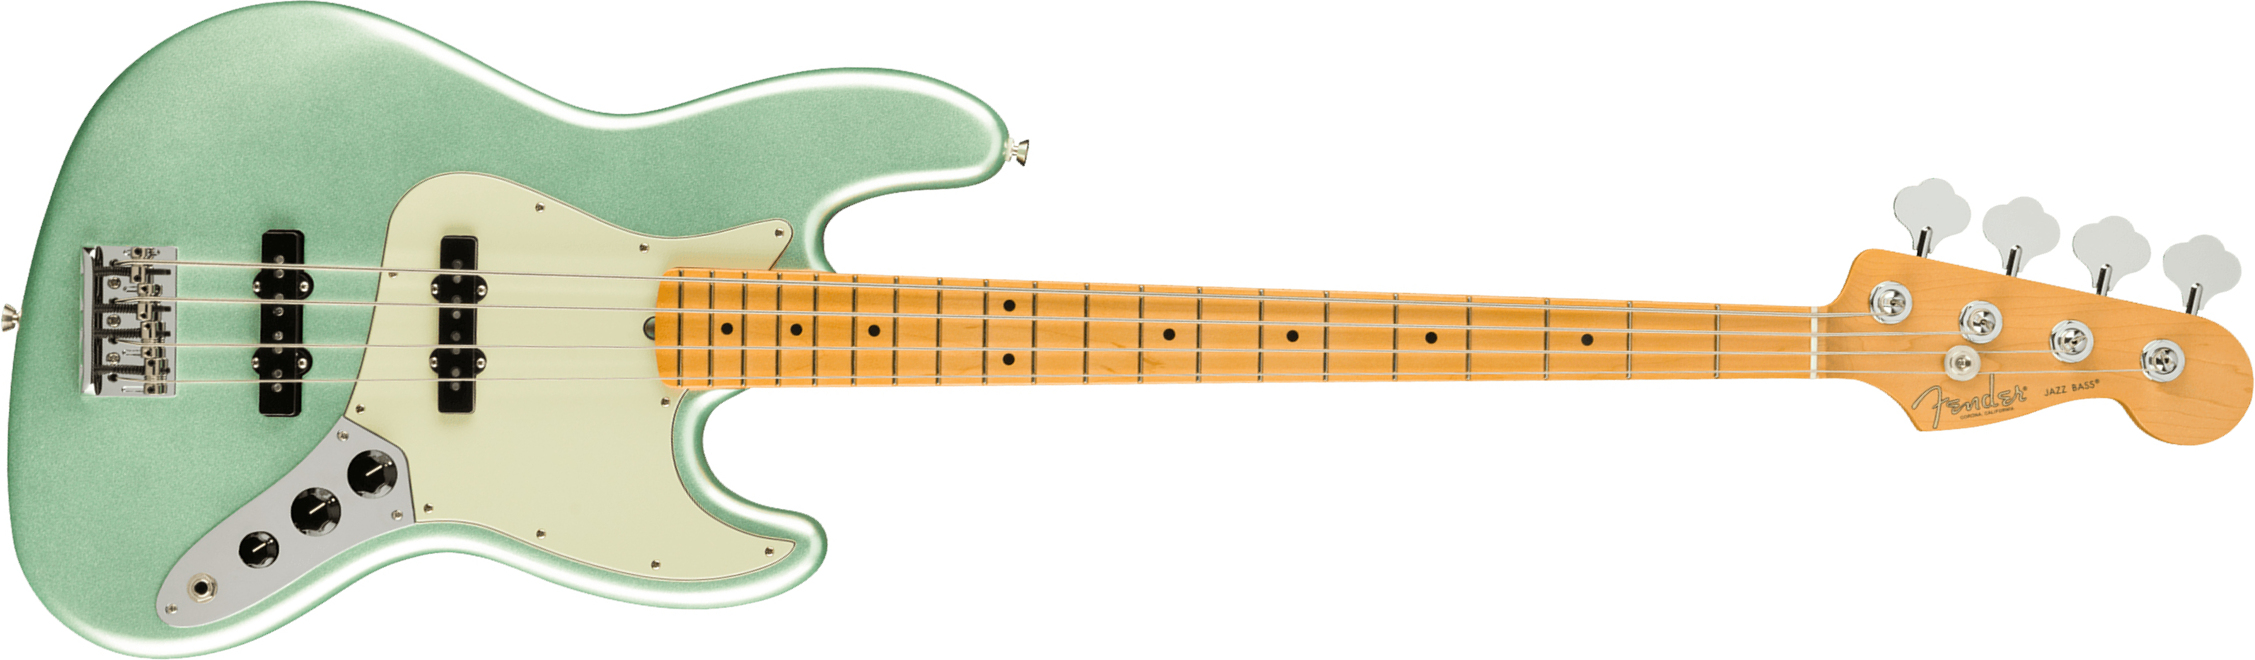 Fender Jazz Bass American Professional Ii Usa Mn - Mystic Surf Green - Bajo eléctrico de cuerpo sólido - Main picture